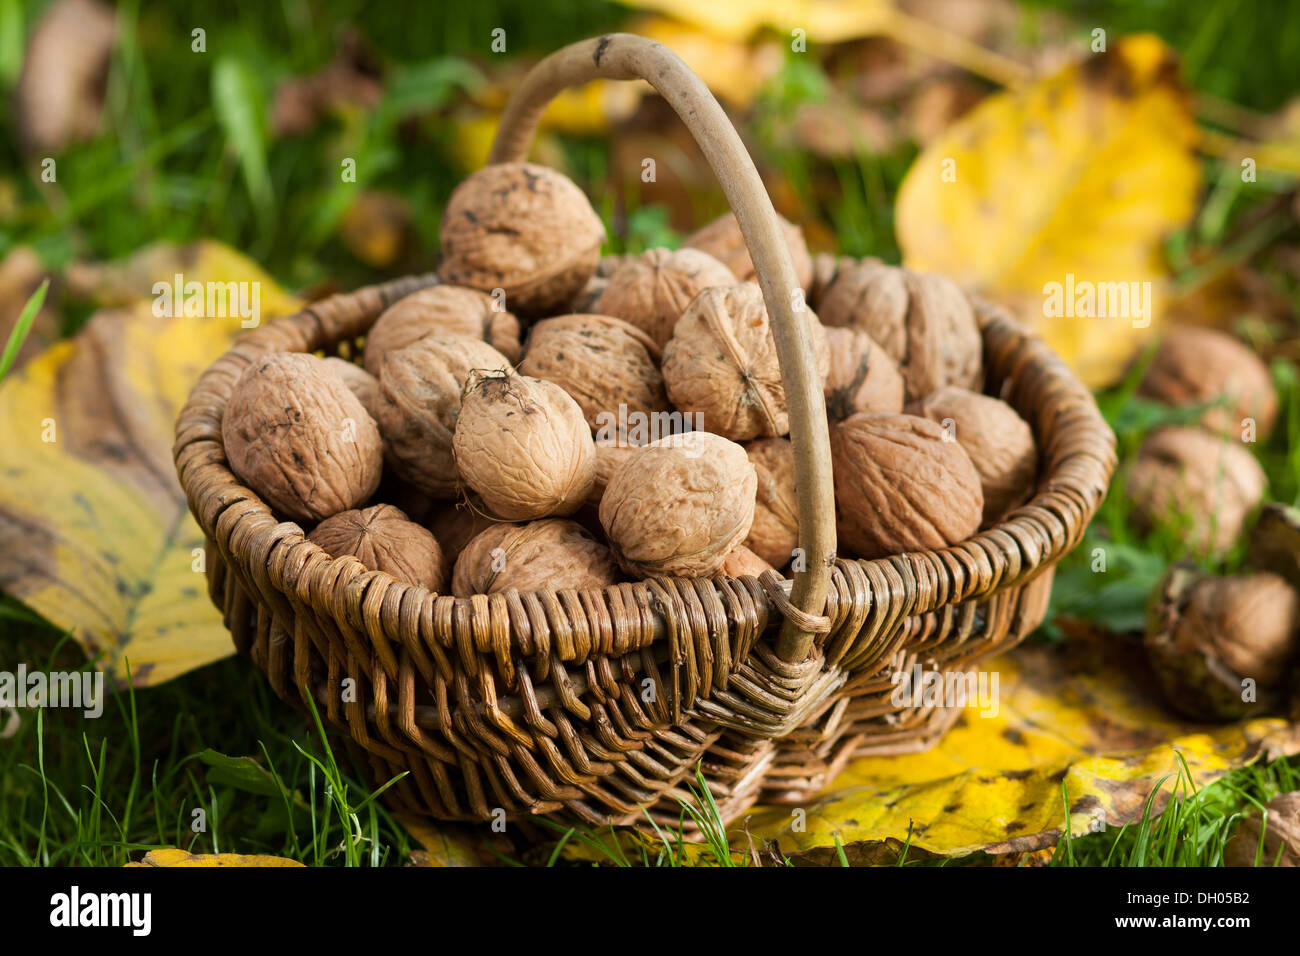 Ripe walnuts in small basket Stock Photo